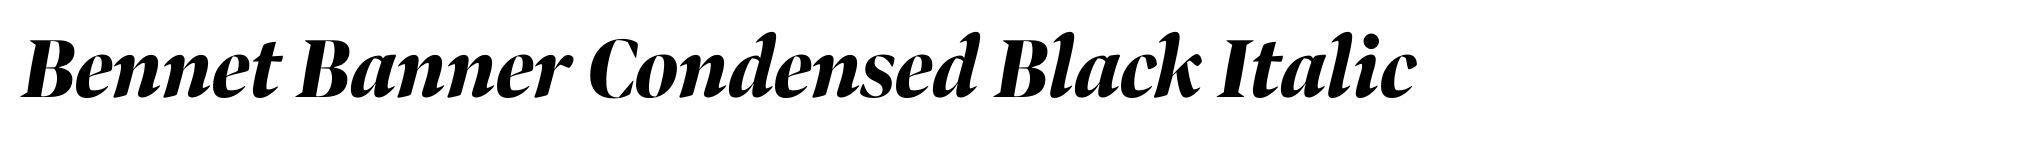 Bennet Banner Condensed Black Italic image